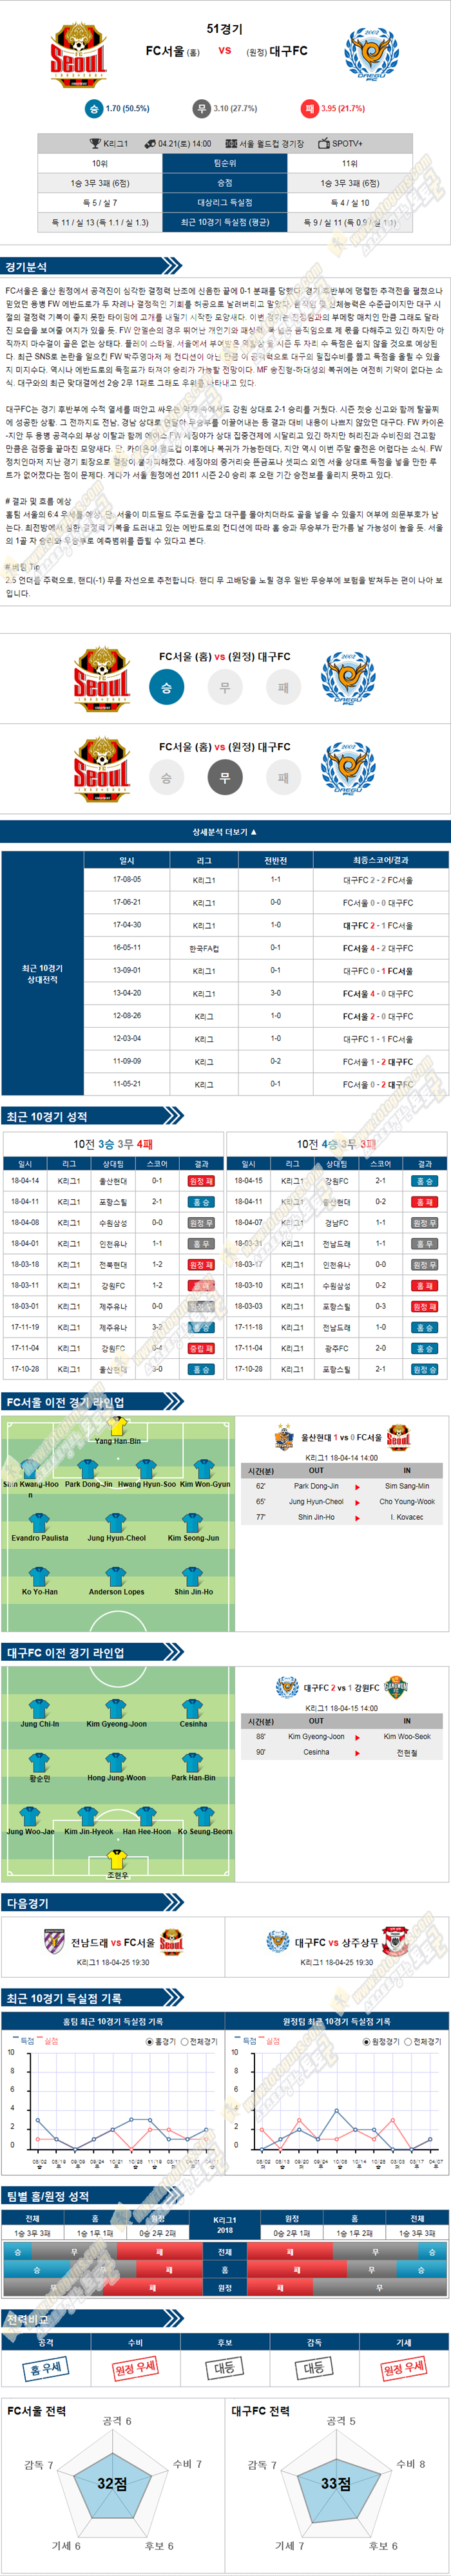 4-21 [KOR D1] 14:00 축구분석 서울 vs 대구